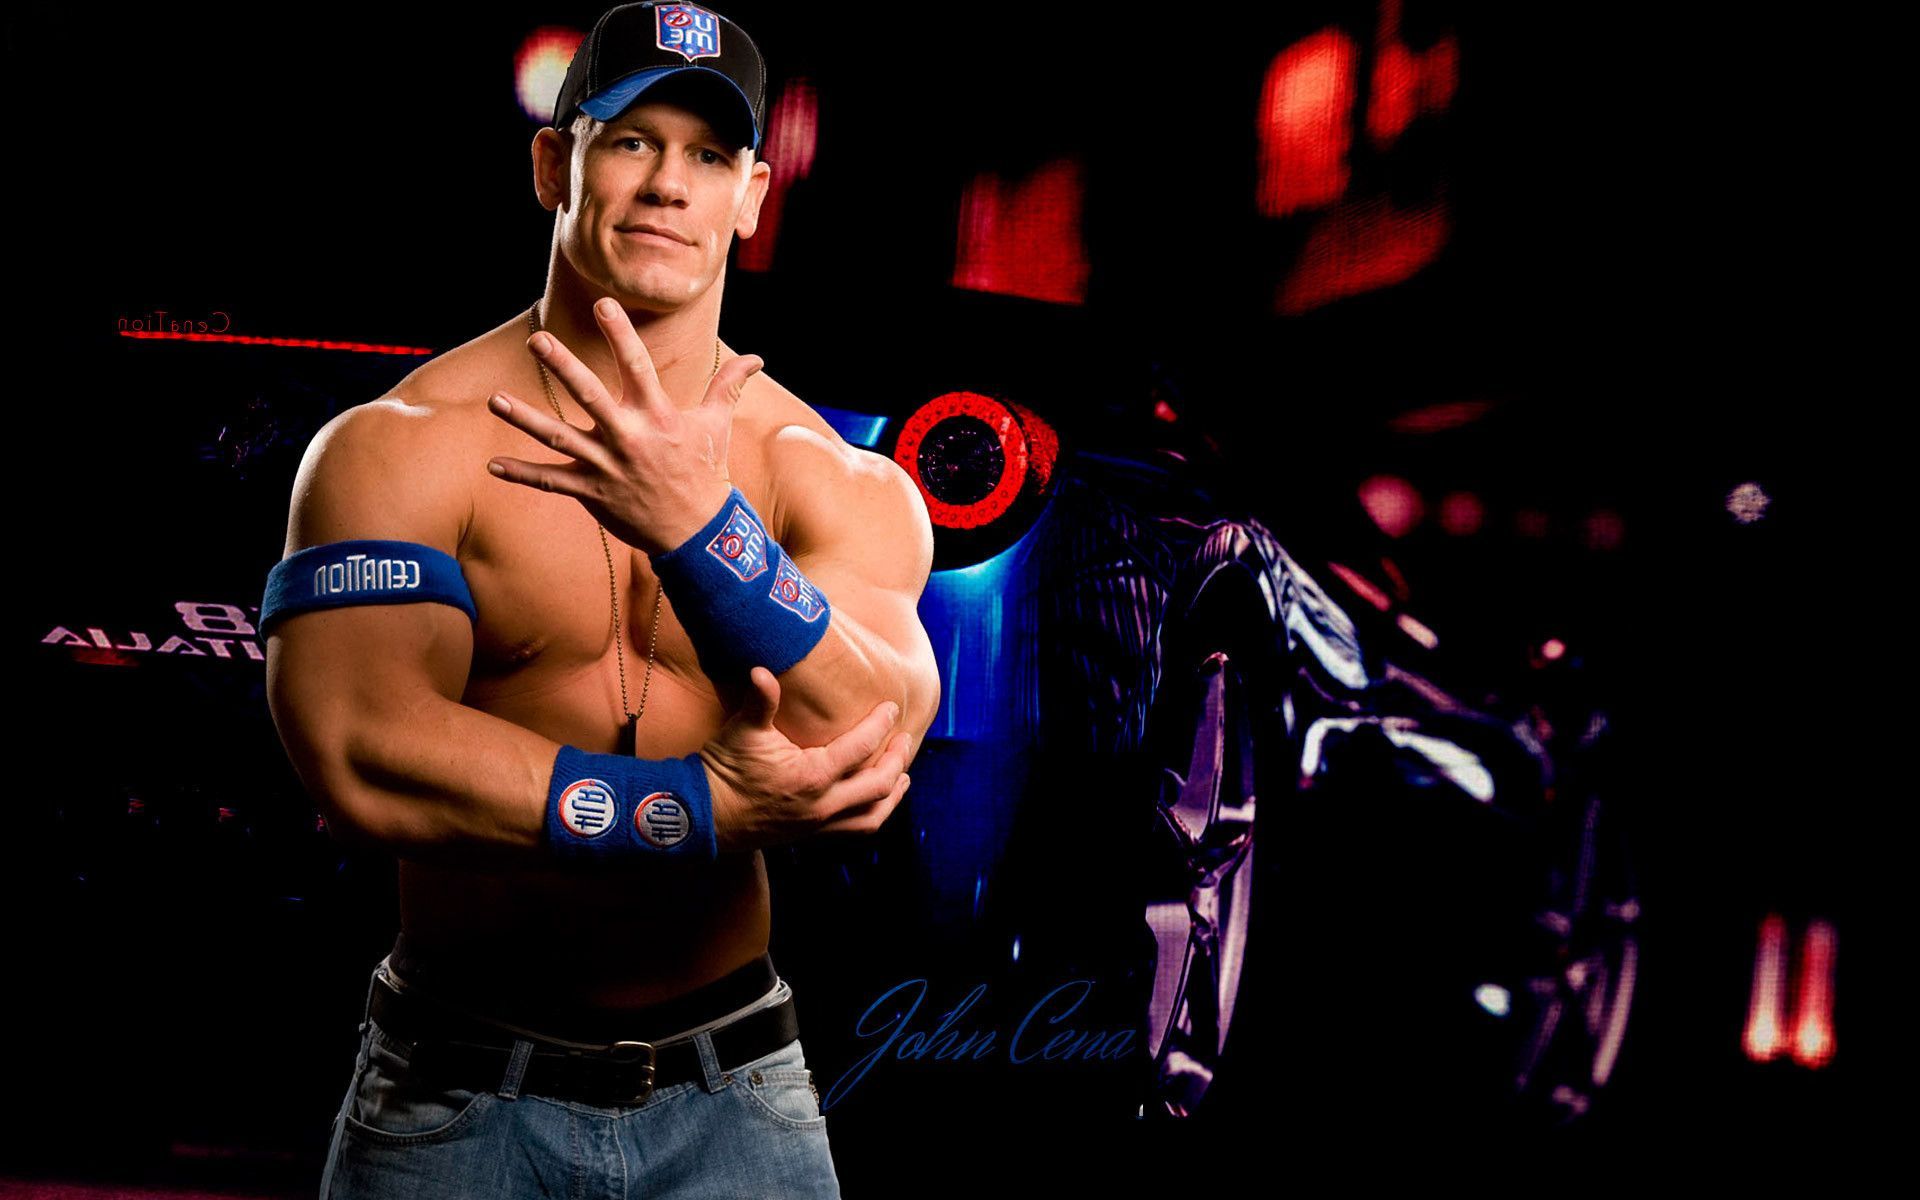 John Cena Wallpaper Free John Cena Background